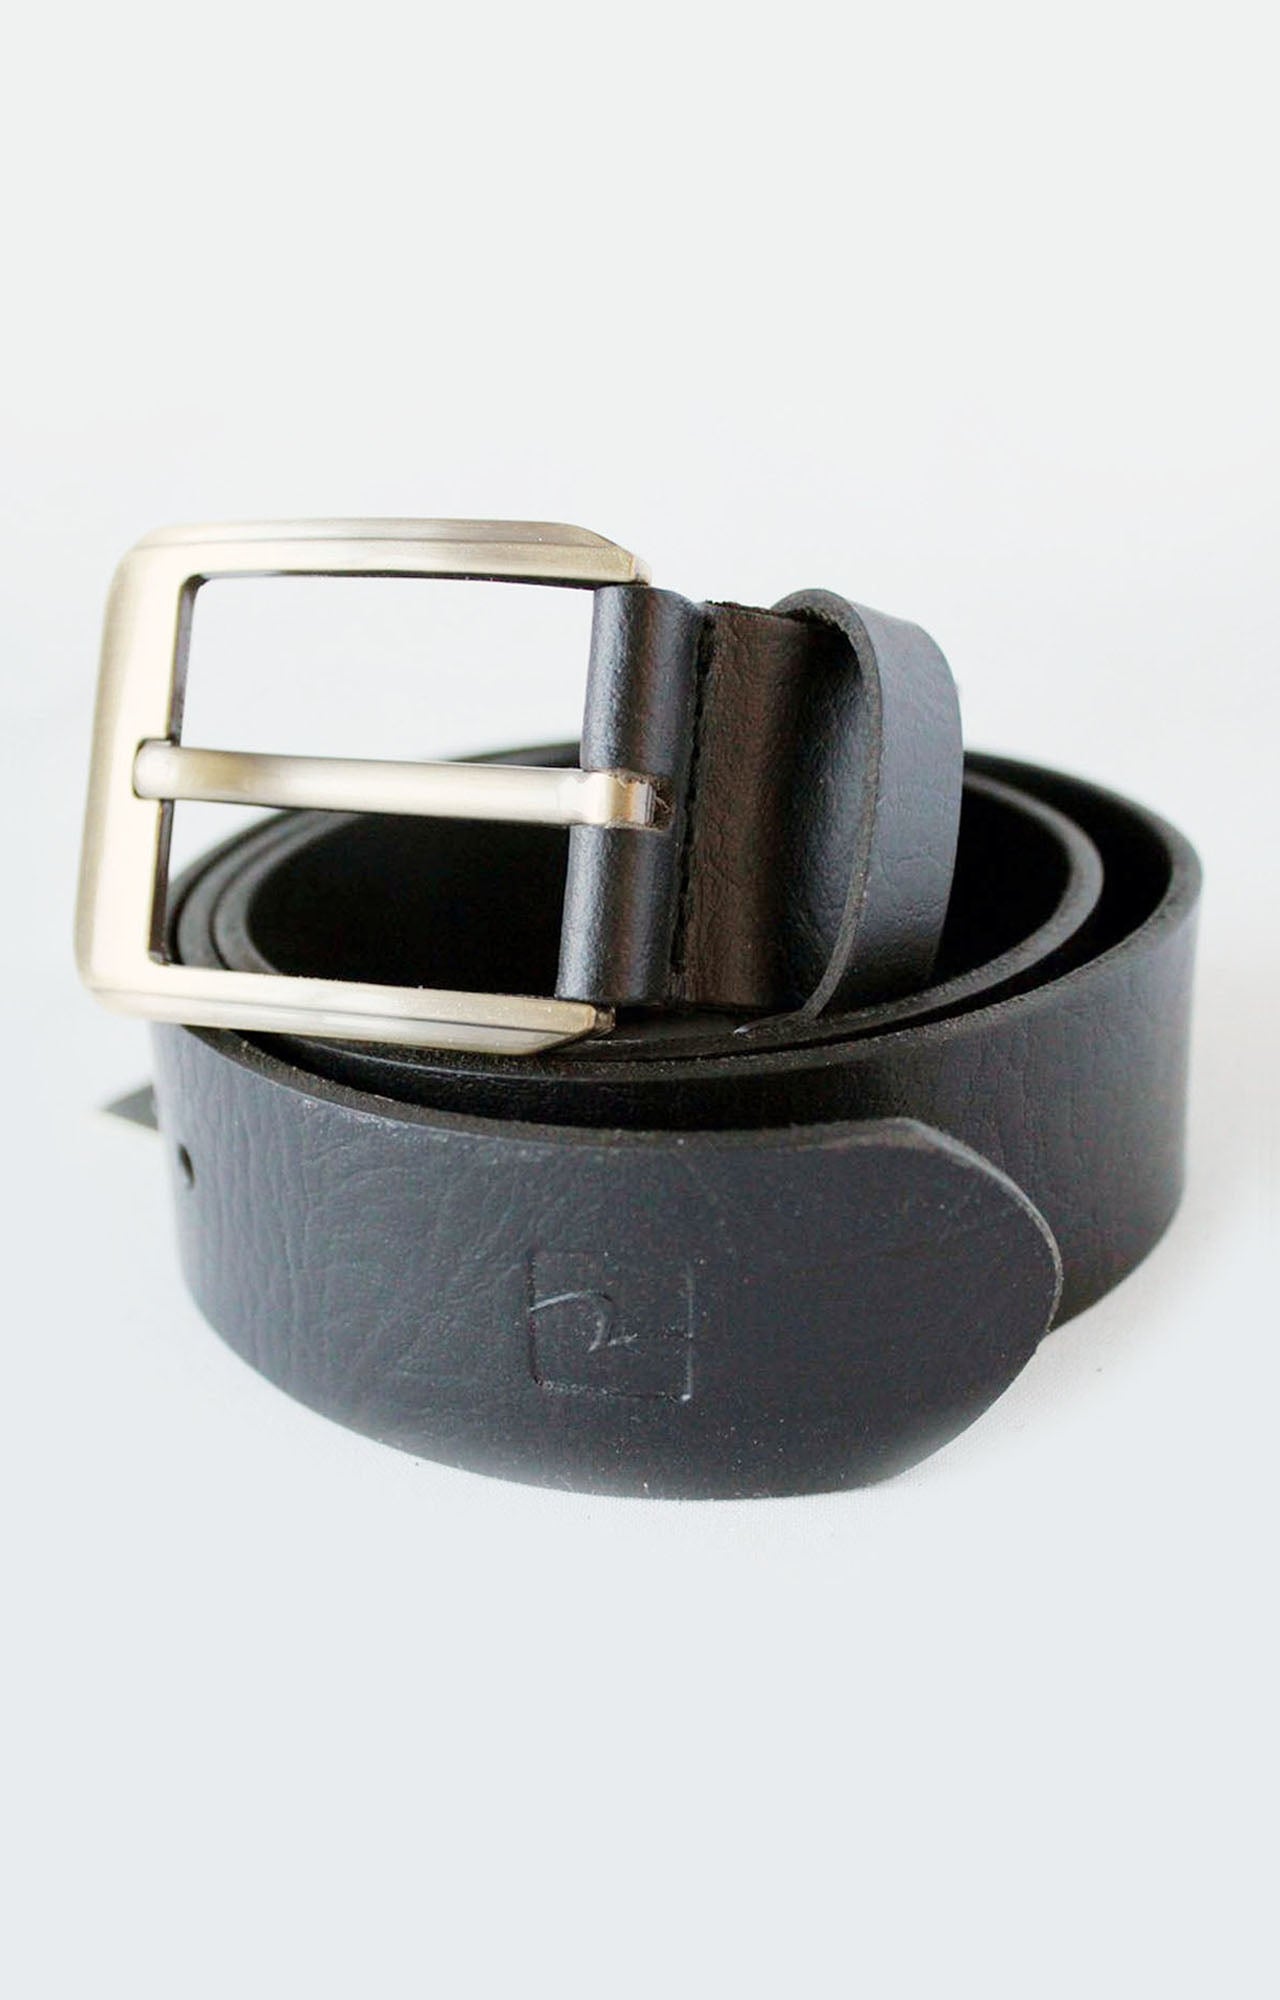 Spykar Black Leather Belts